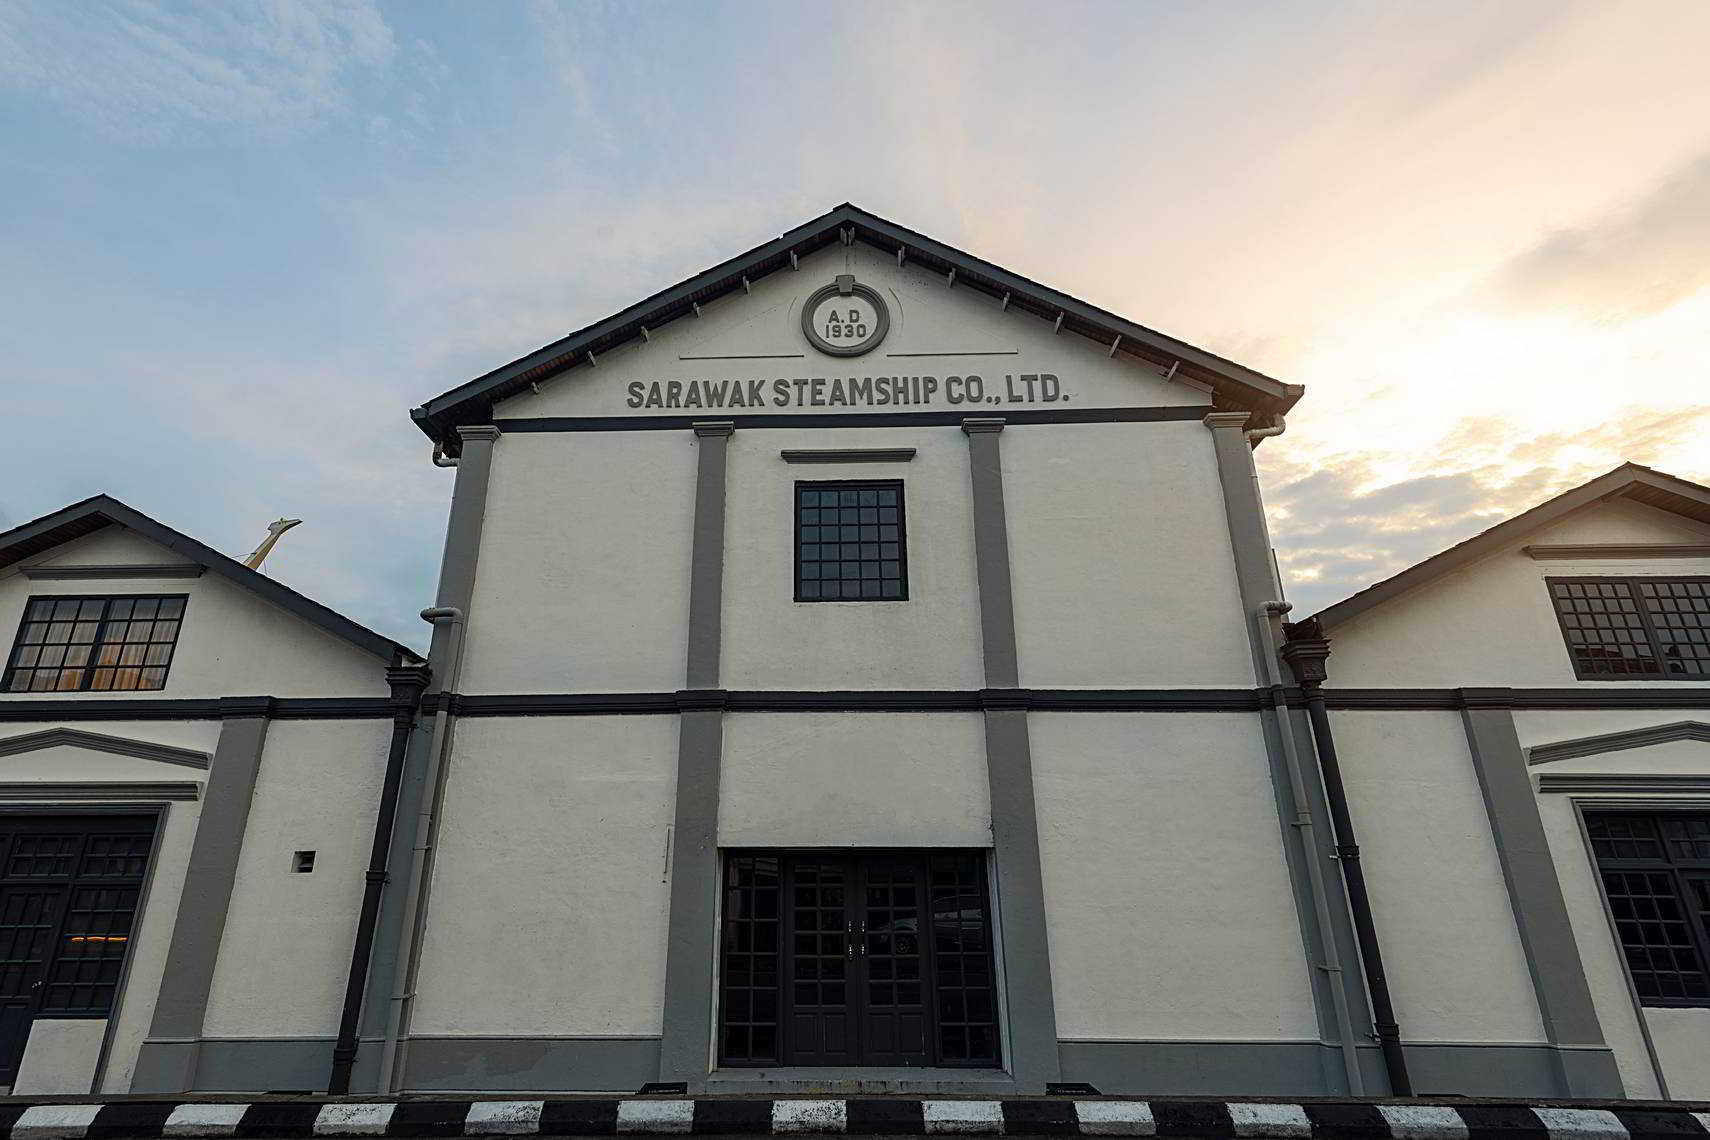 Old Sarawak Steamship Building